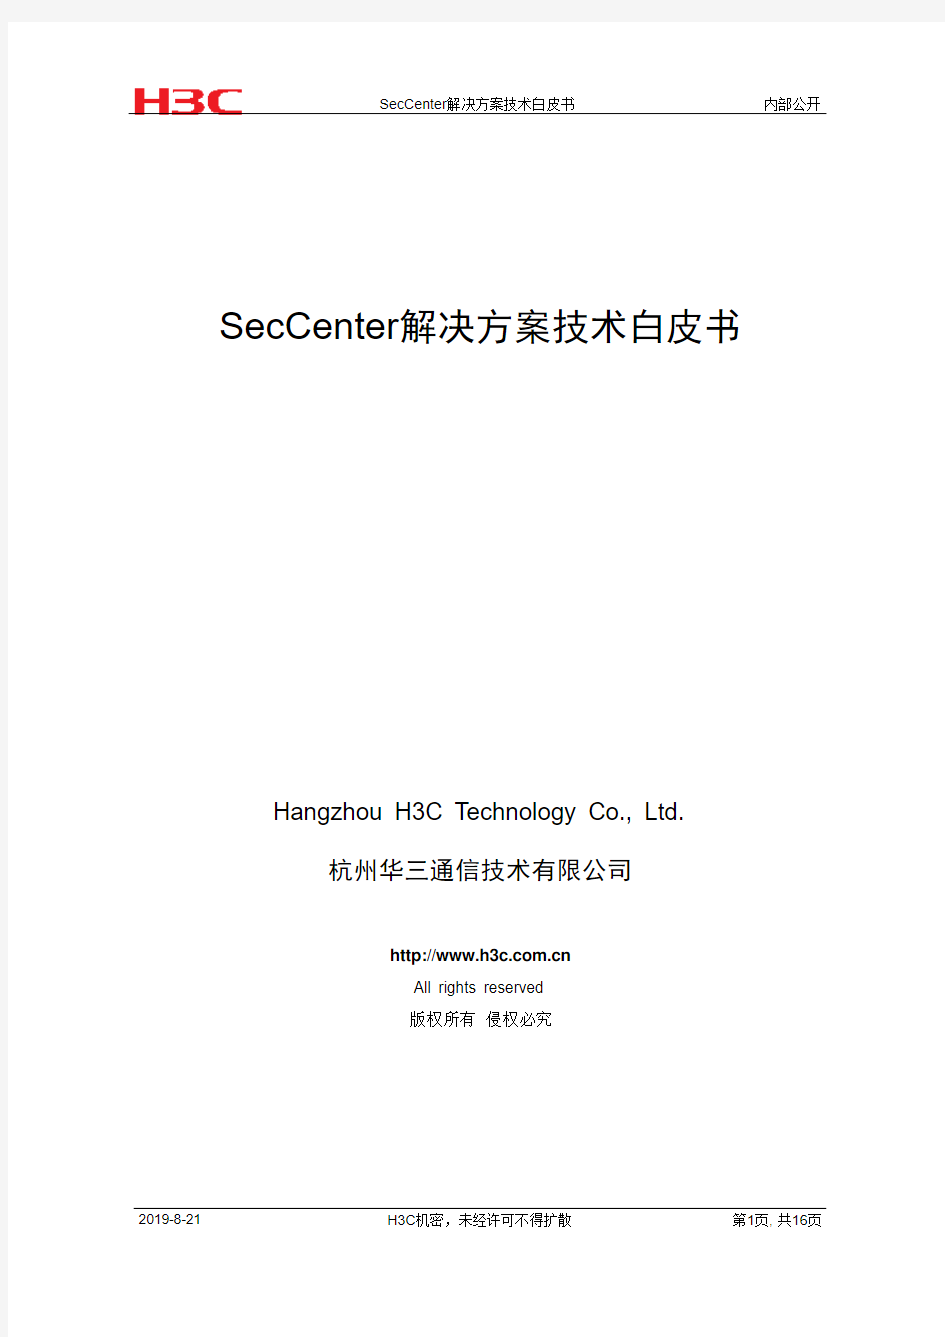 H3C SecCenter 解决方案技术白皮书 V1.1